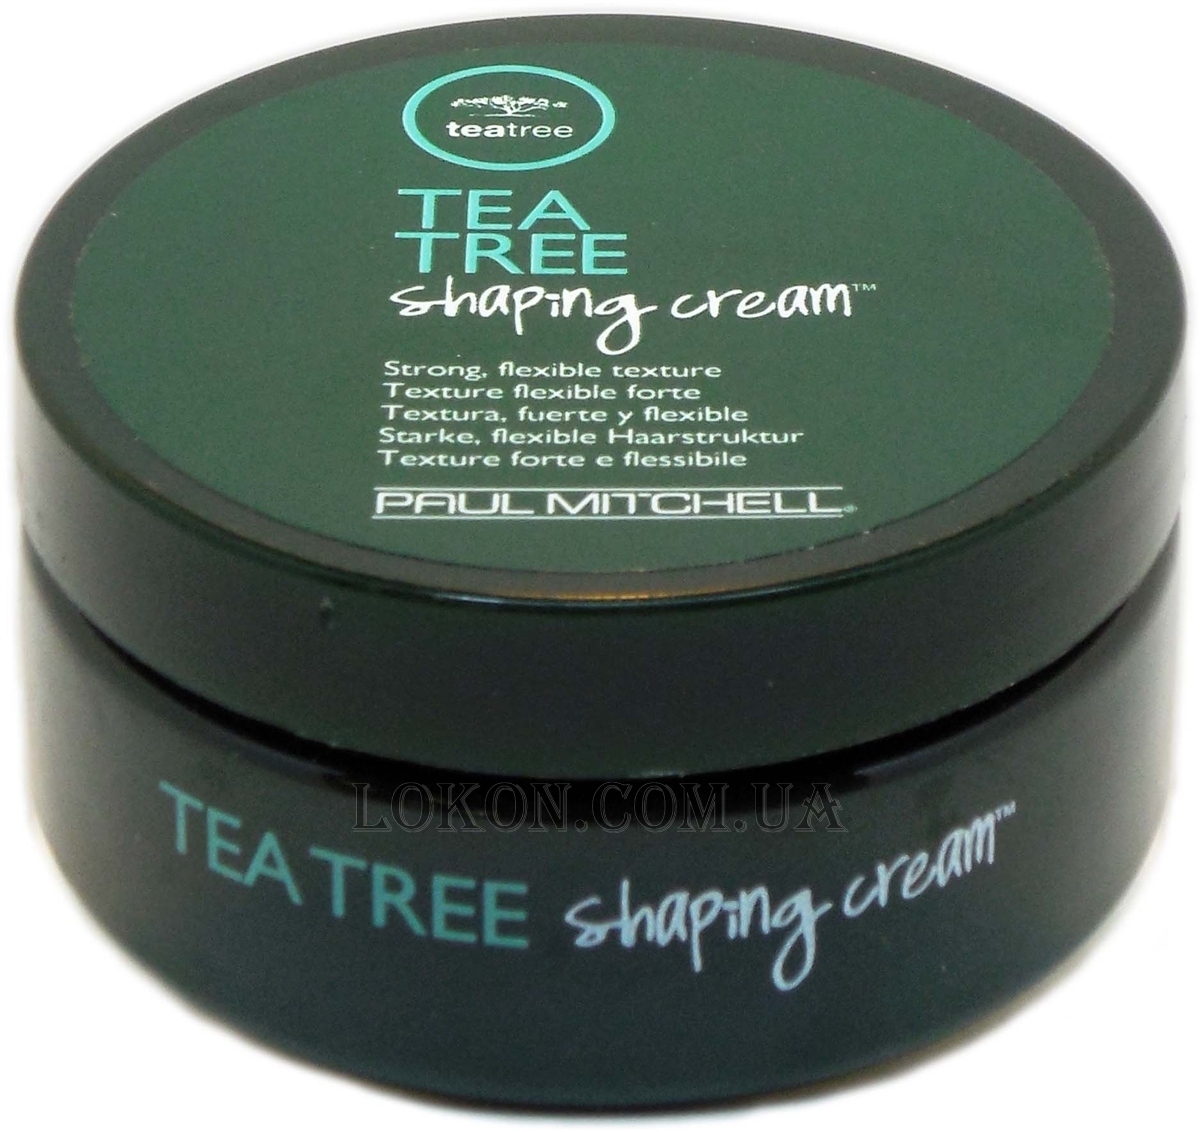 PAUL MITCHELL Tea Tree Shaping Cream - Крем для укладки